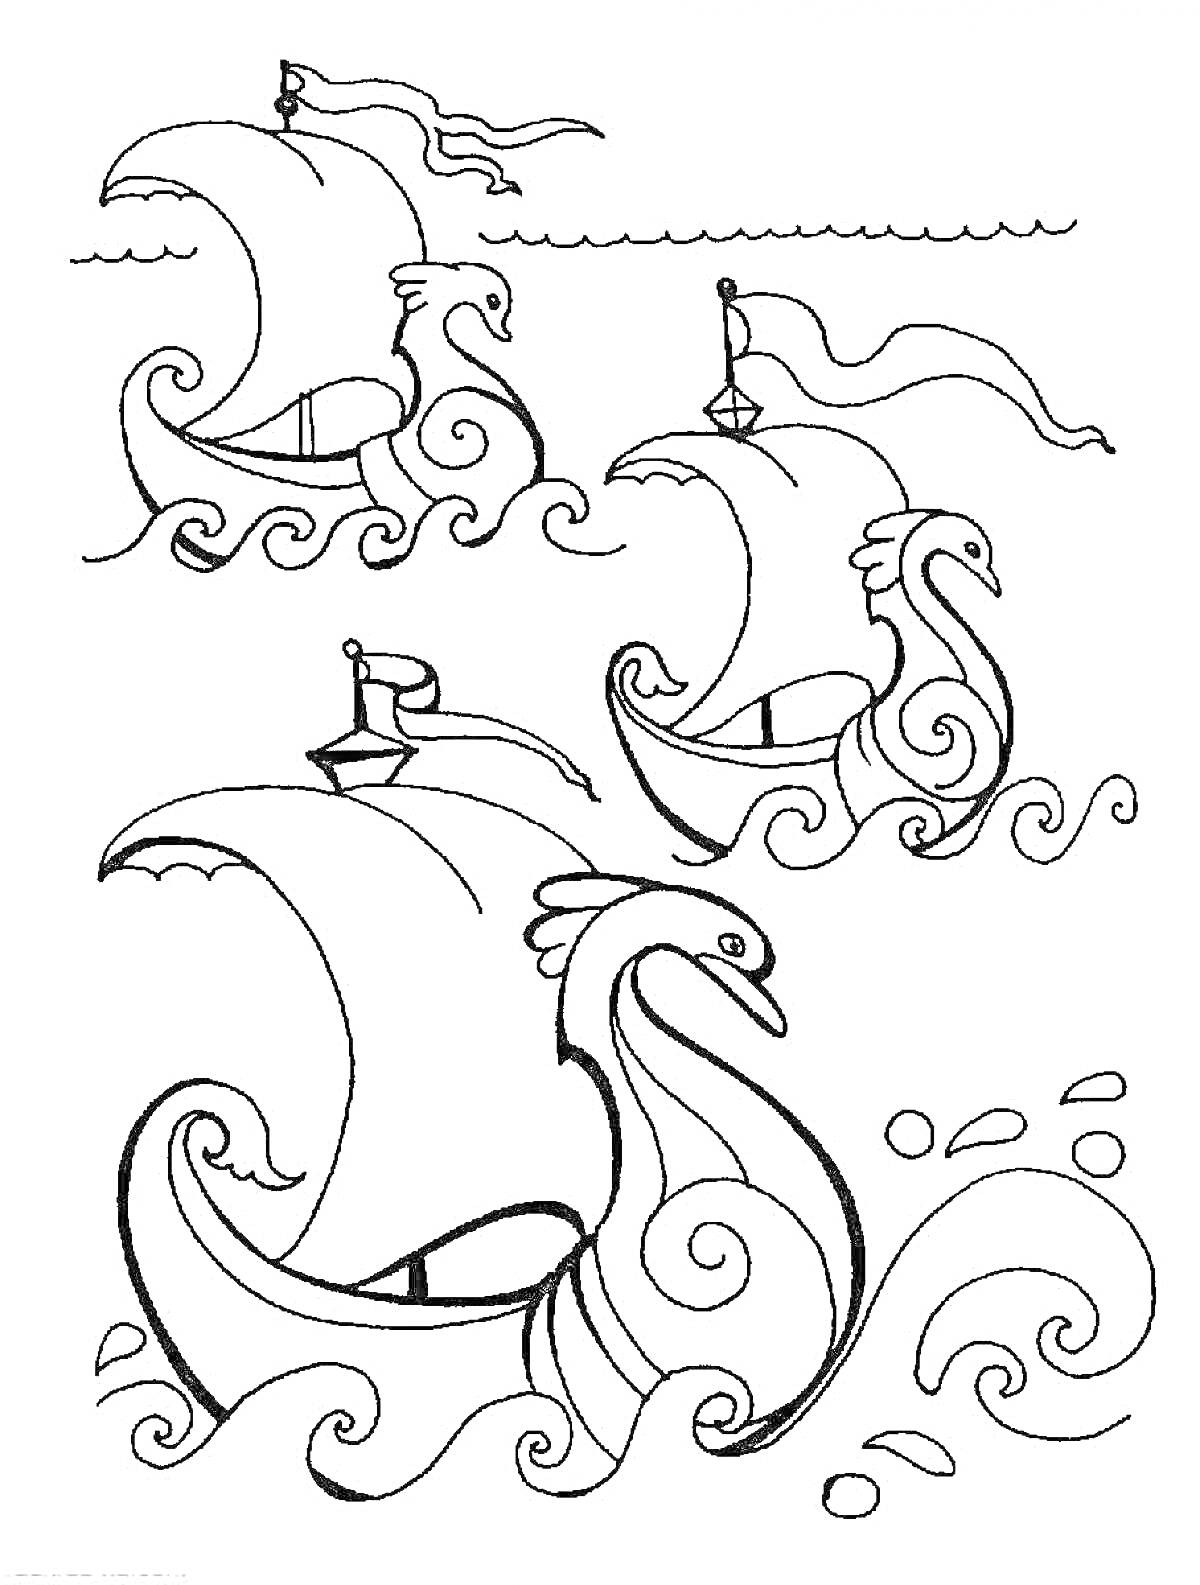 Раскраска Три парусных лодки в морских волнах с элементами сказки 